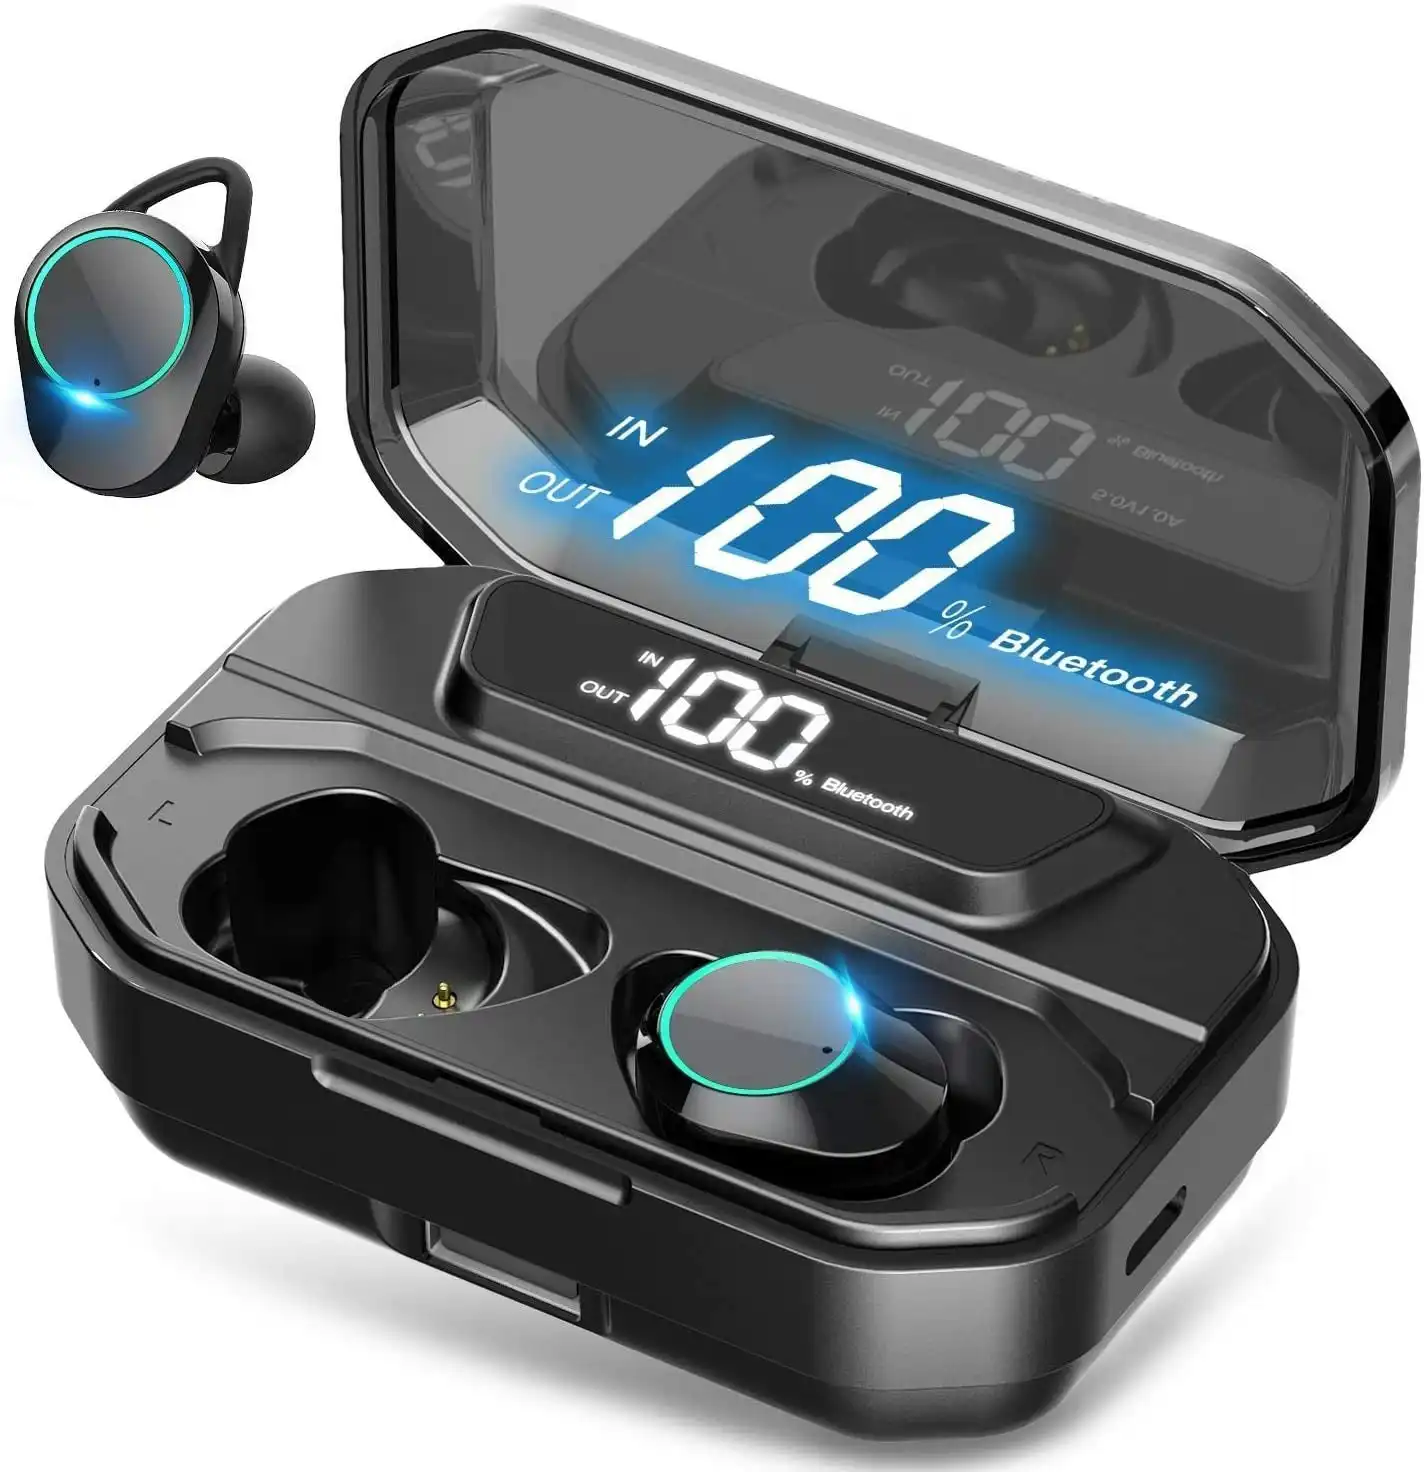 [Xmythorig Ultimate] True Wireless Earbuds Bluetooth 5.0 Headphones, IPX7 Waterproof Earphones for Sports, 110H Playtime w/ 3300mAh Charging Case, 3D